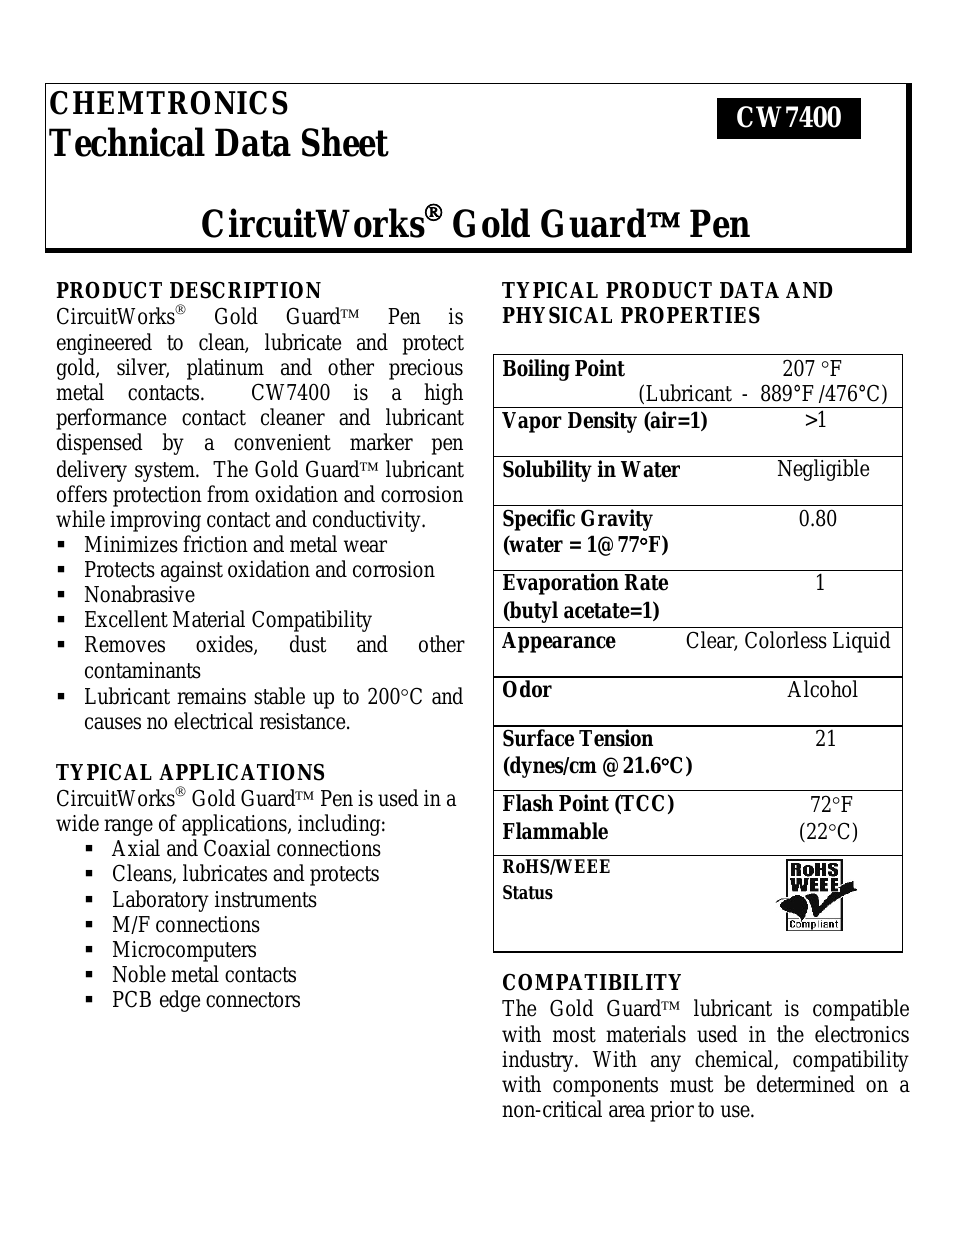 CircuitWorks® Gold Guard™ Pen CW7400